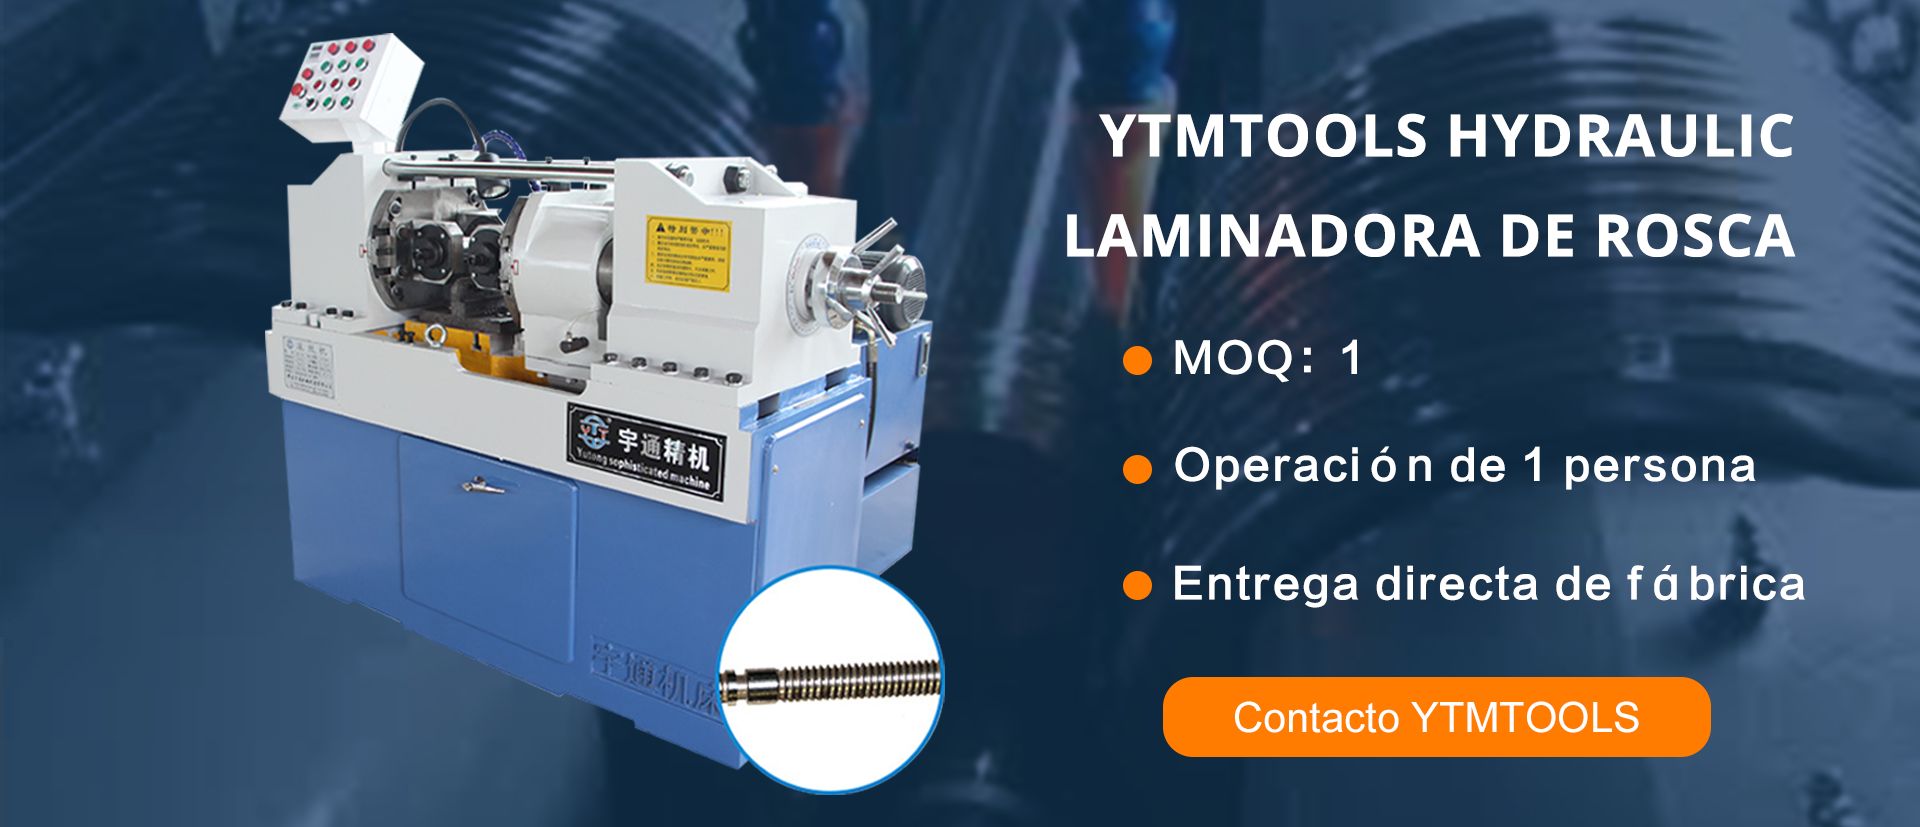 YTMTOOLS Hydraulic Laminadora de Rosca banner